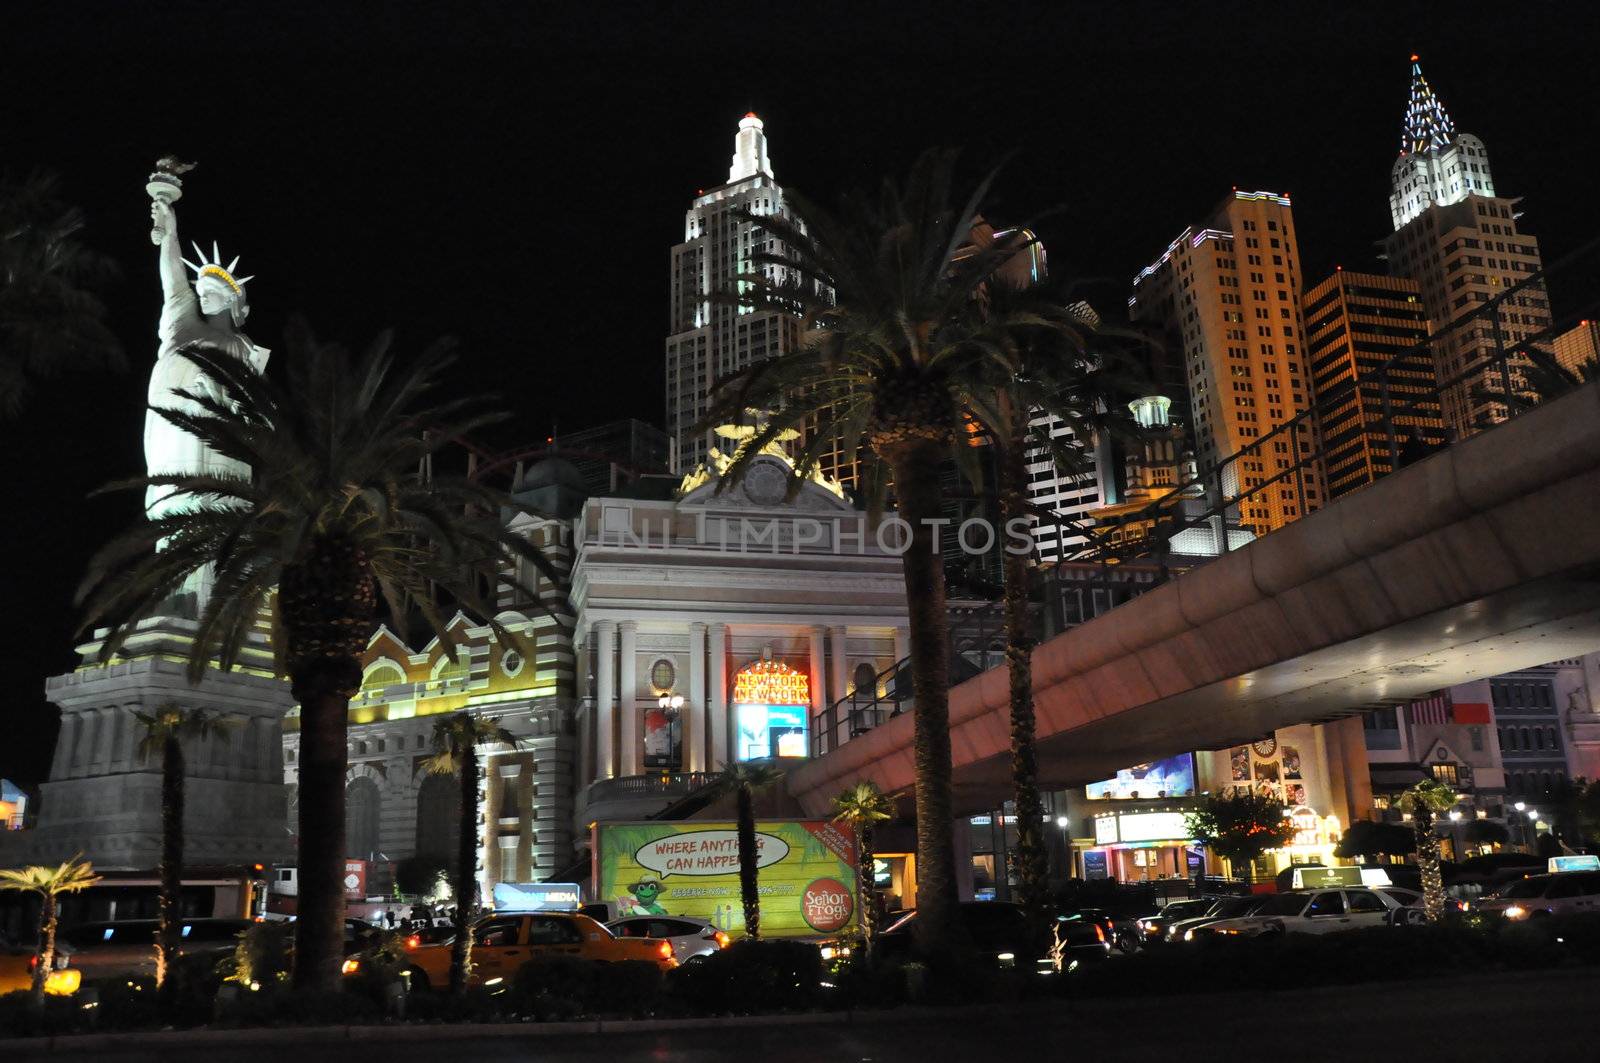 New York New York Hotel and Casino in Las Vegas, Nevada